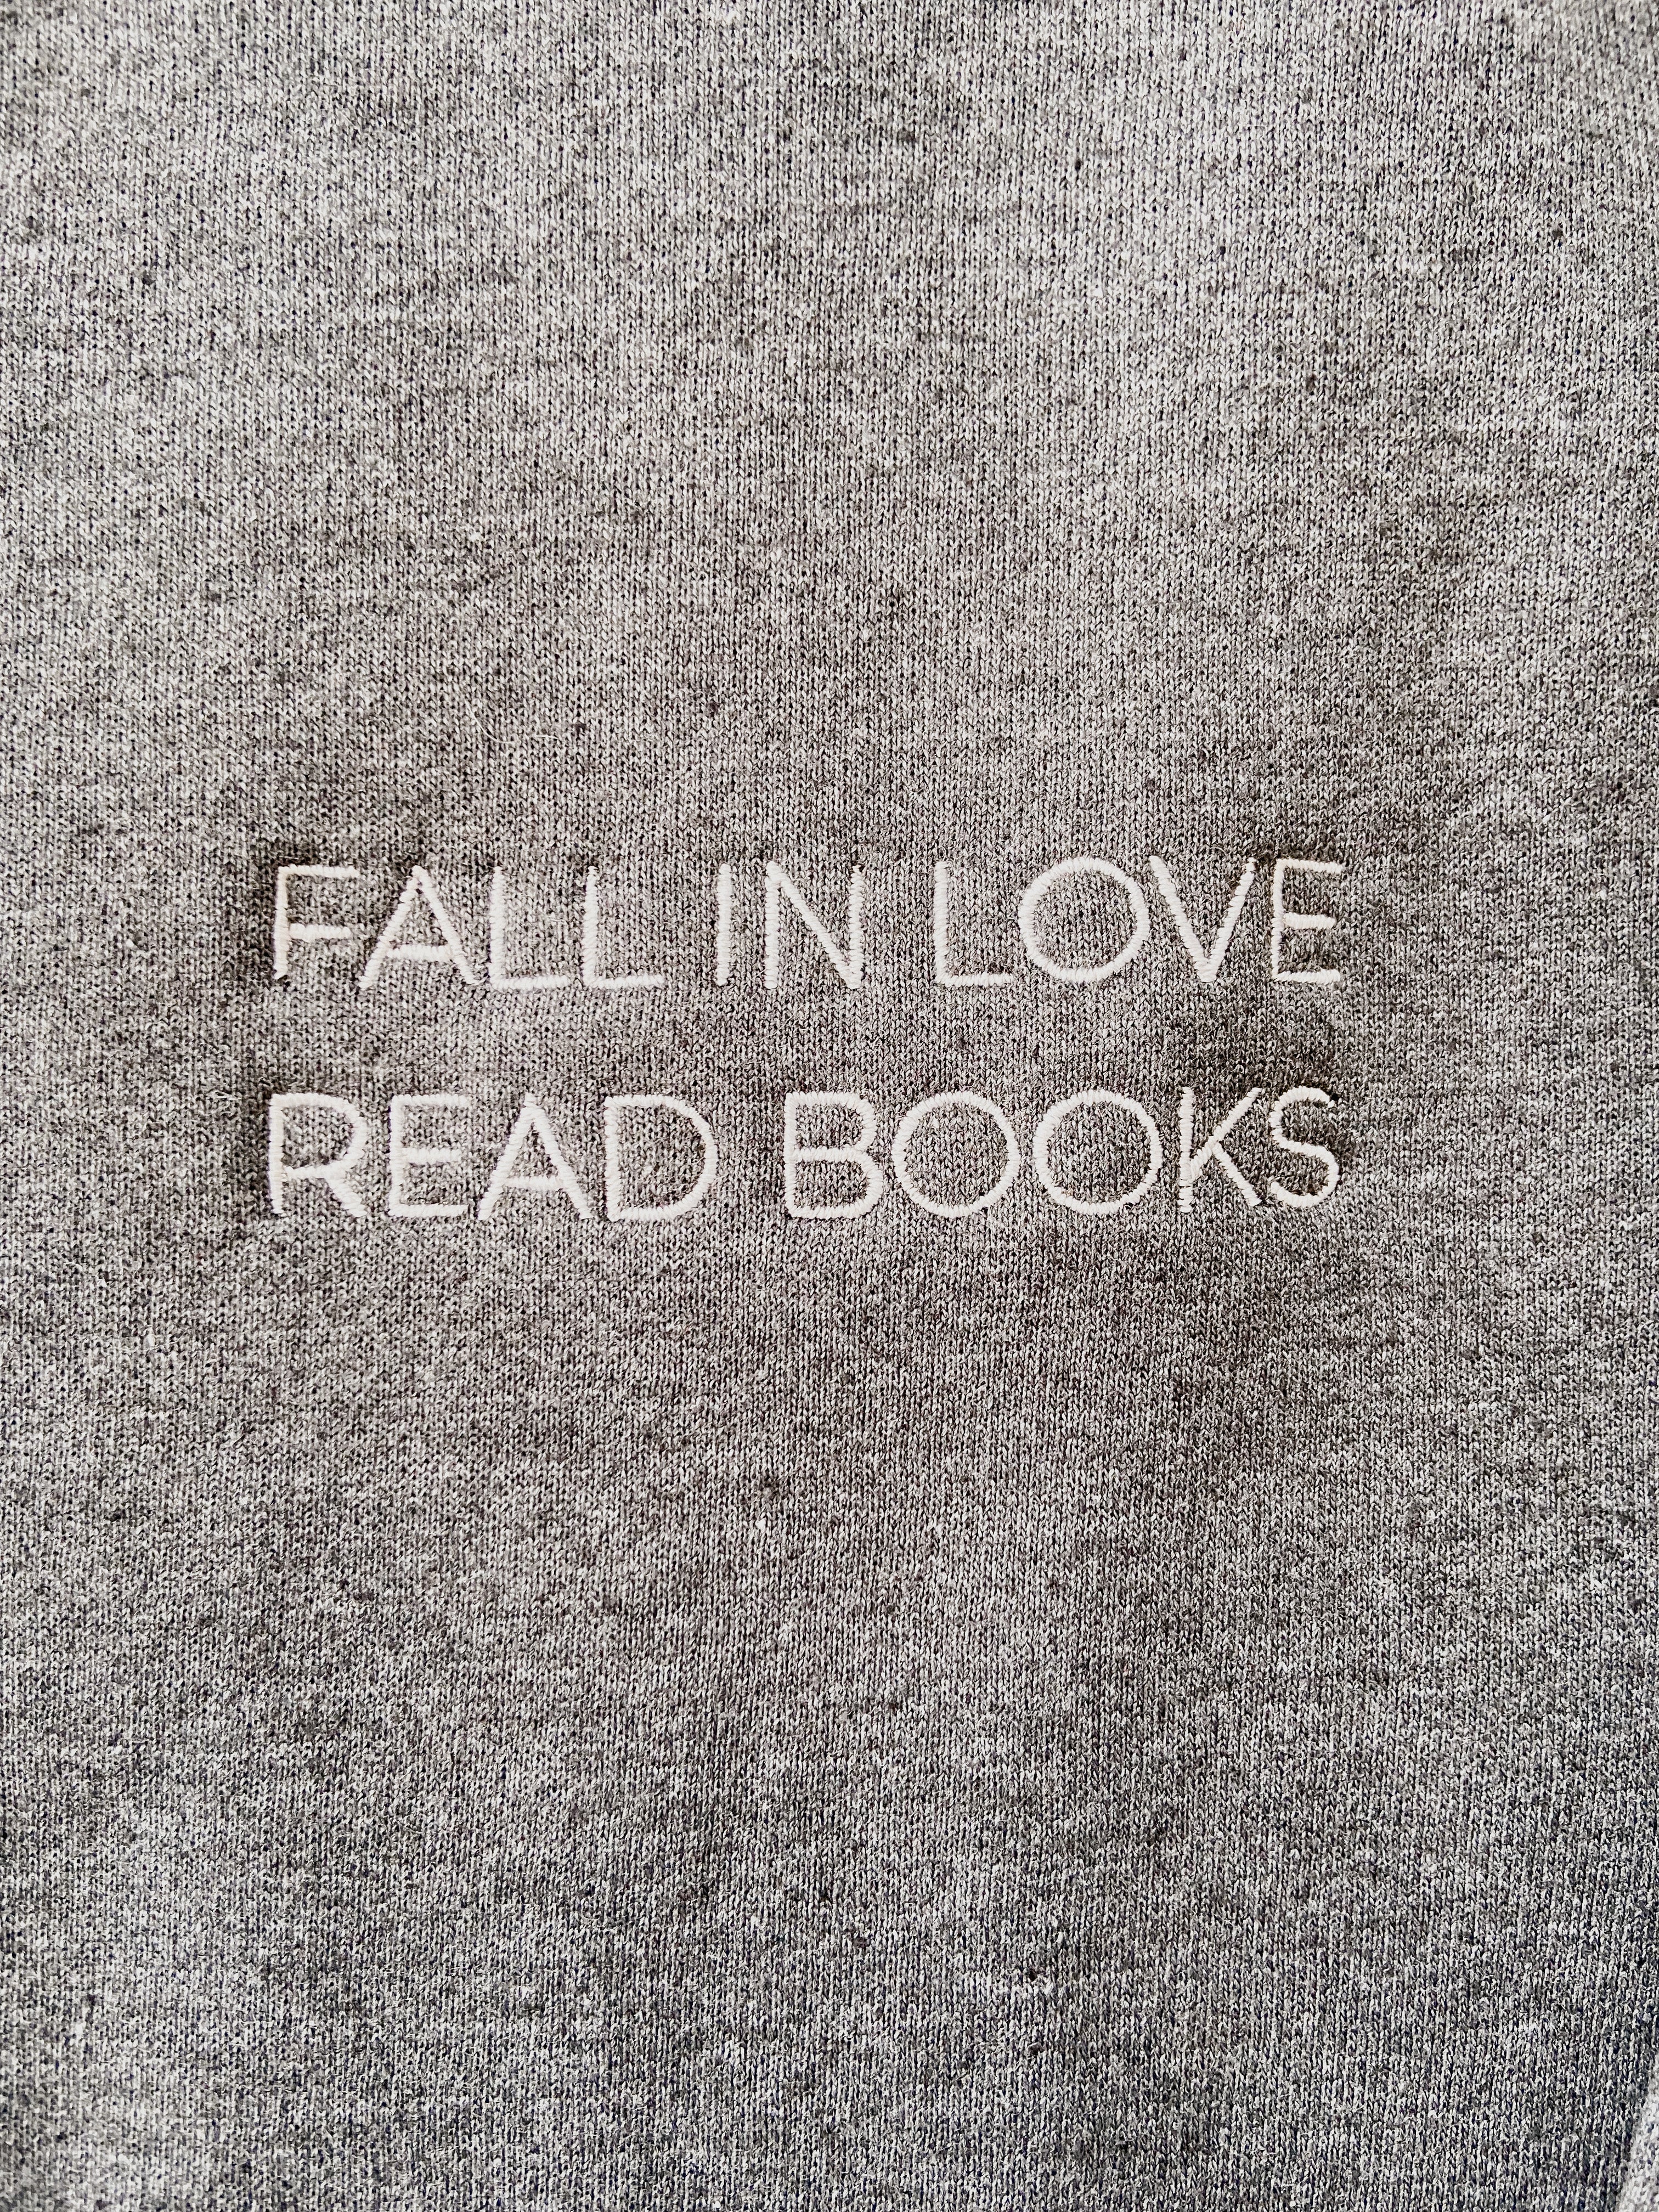 FALL IN LOVE READ BOOKS CREWNECK SWEATSHIRT